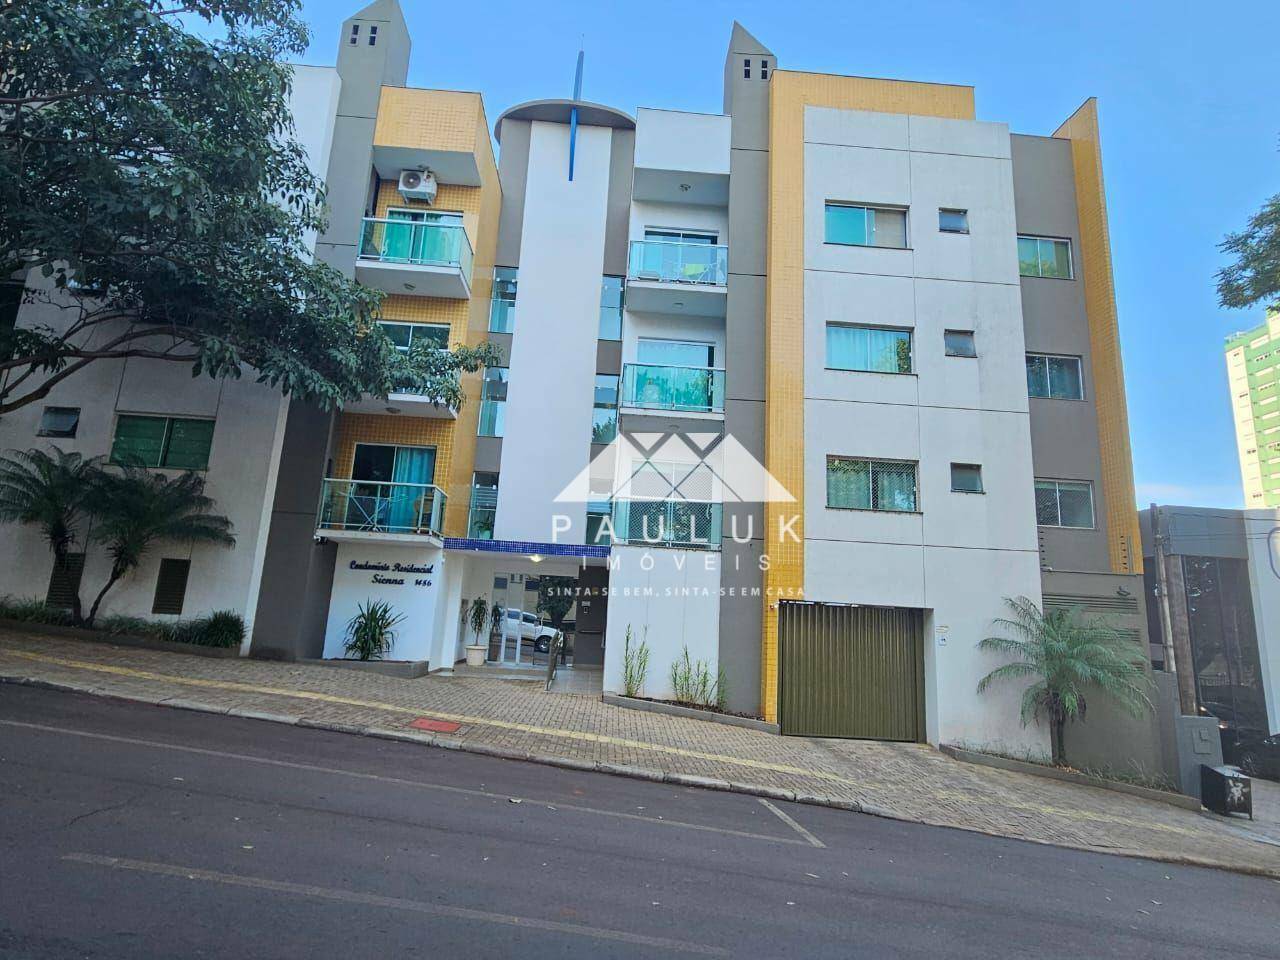 Apartamento com 2 Dormitórios à Venda, 51 M² Por R$ 330.000,00 - Condomínio Residencial Sienna - Foz | PAULUK IMÓVEIS | Portal OBusca